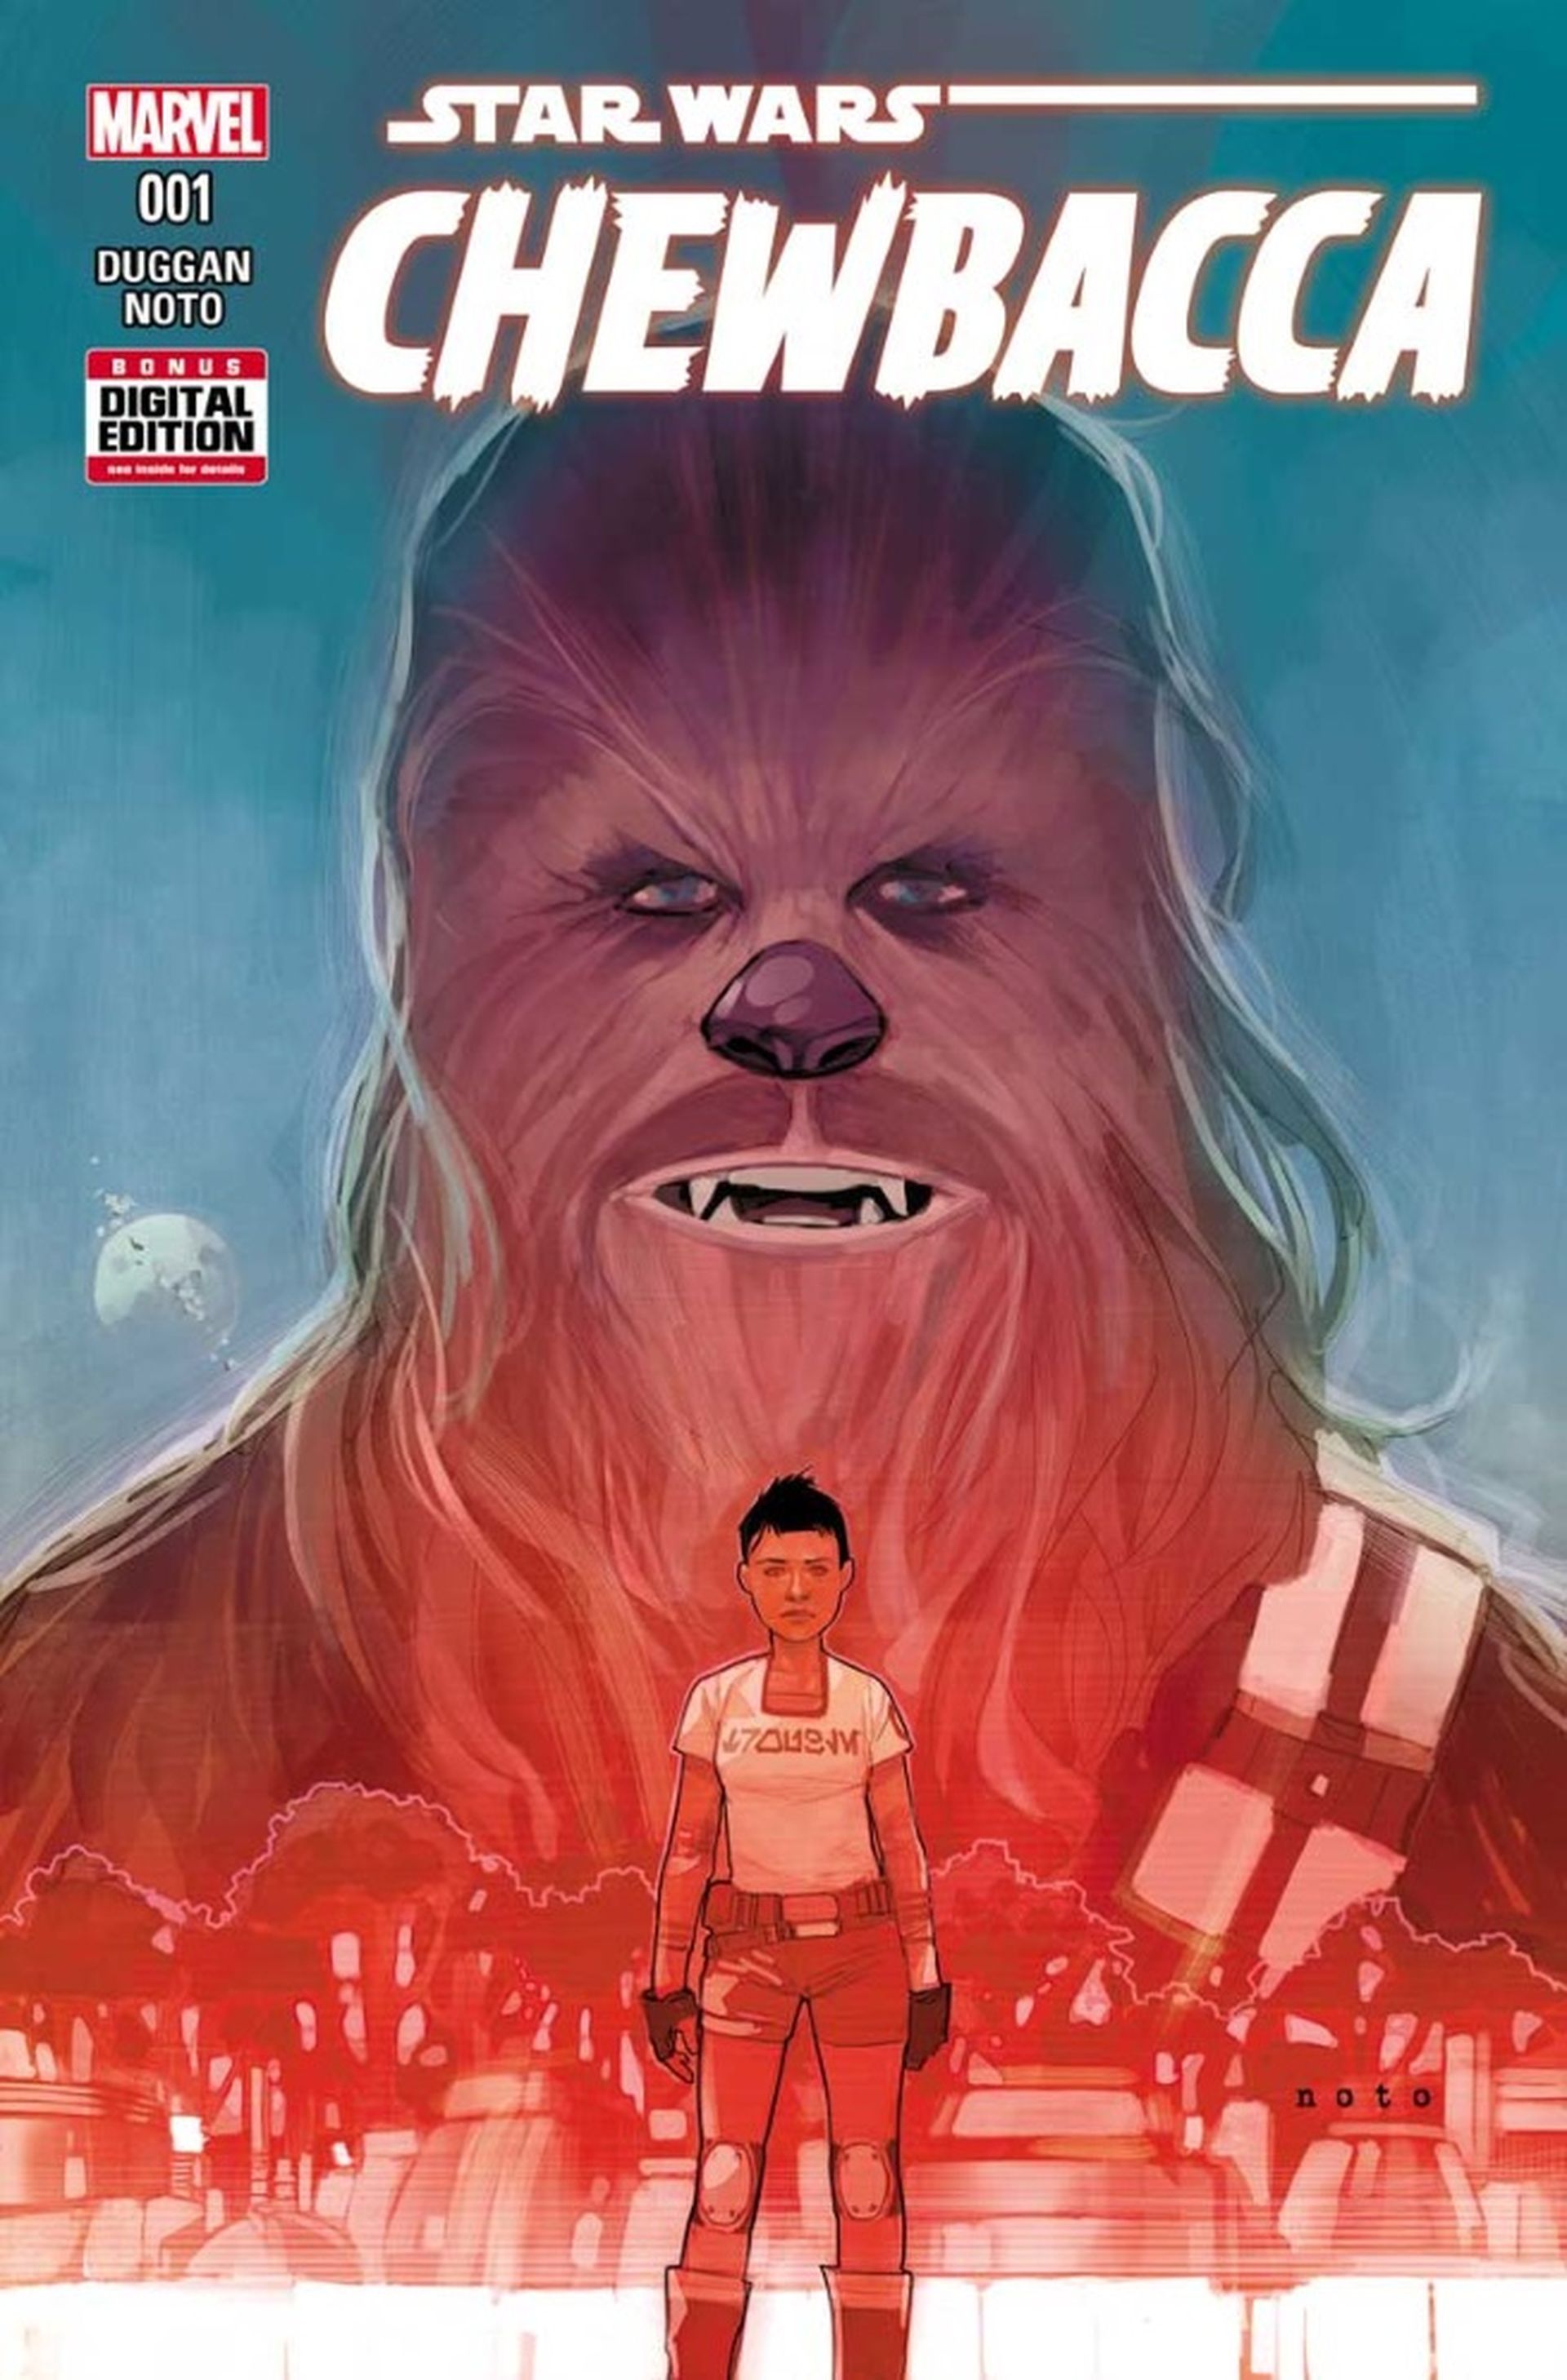 San Diego Comic Con Chewbacca Tendrá Cómic De Star Wars 